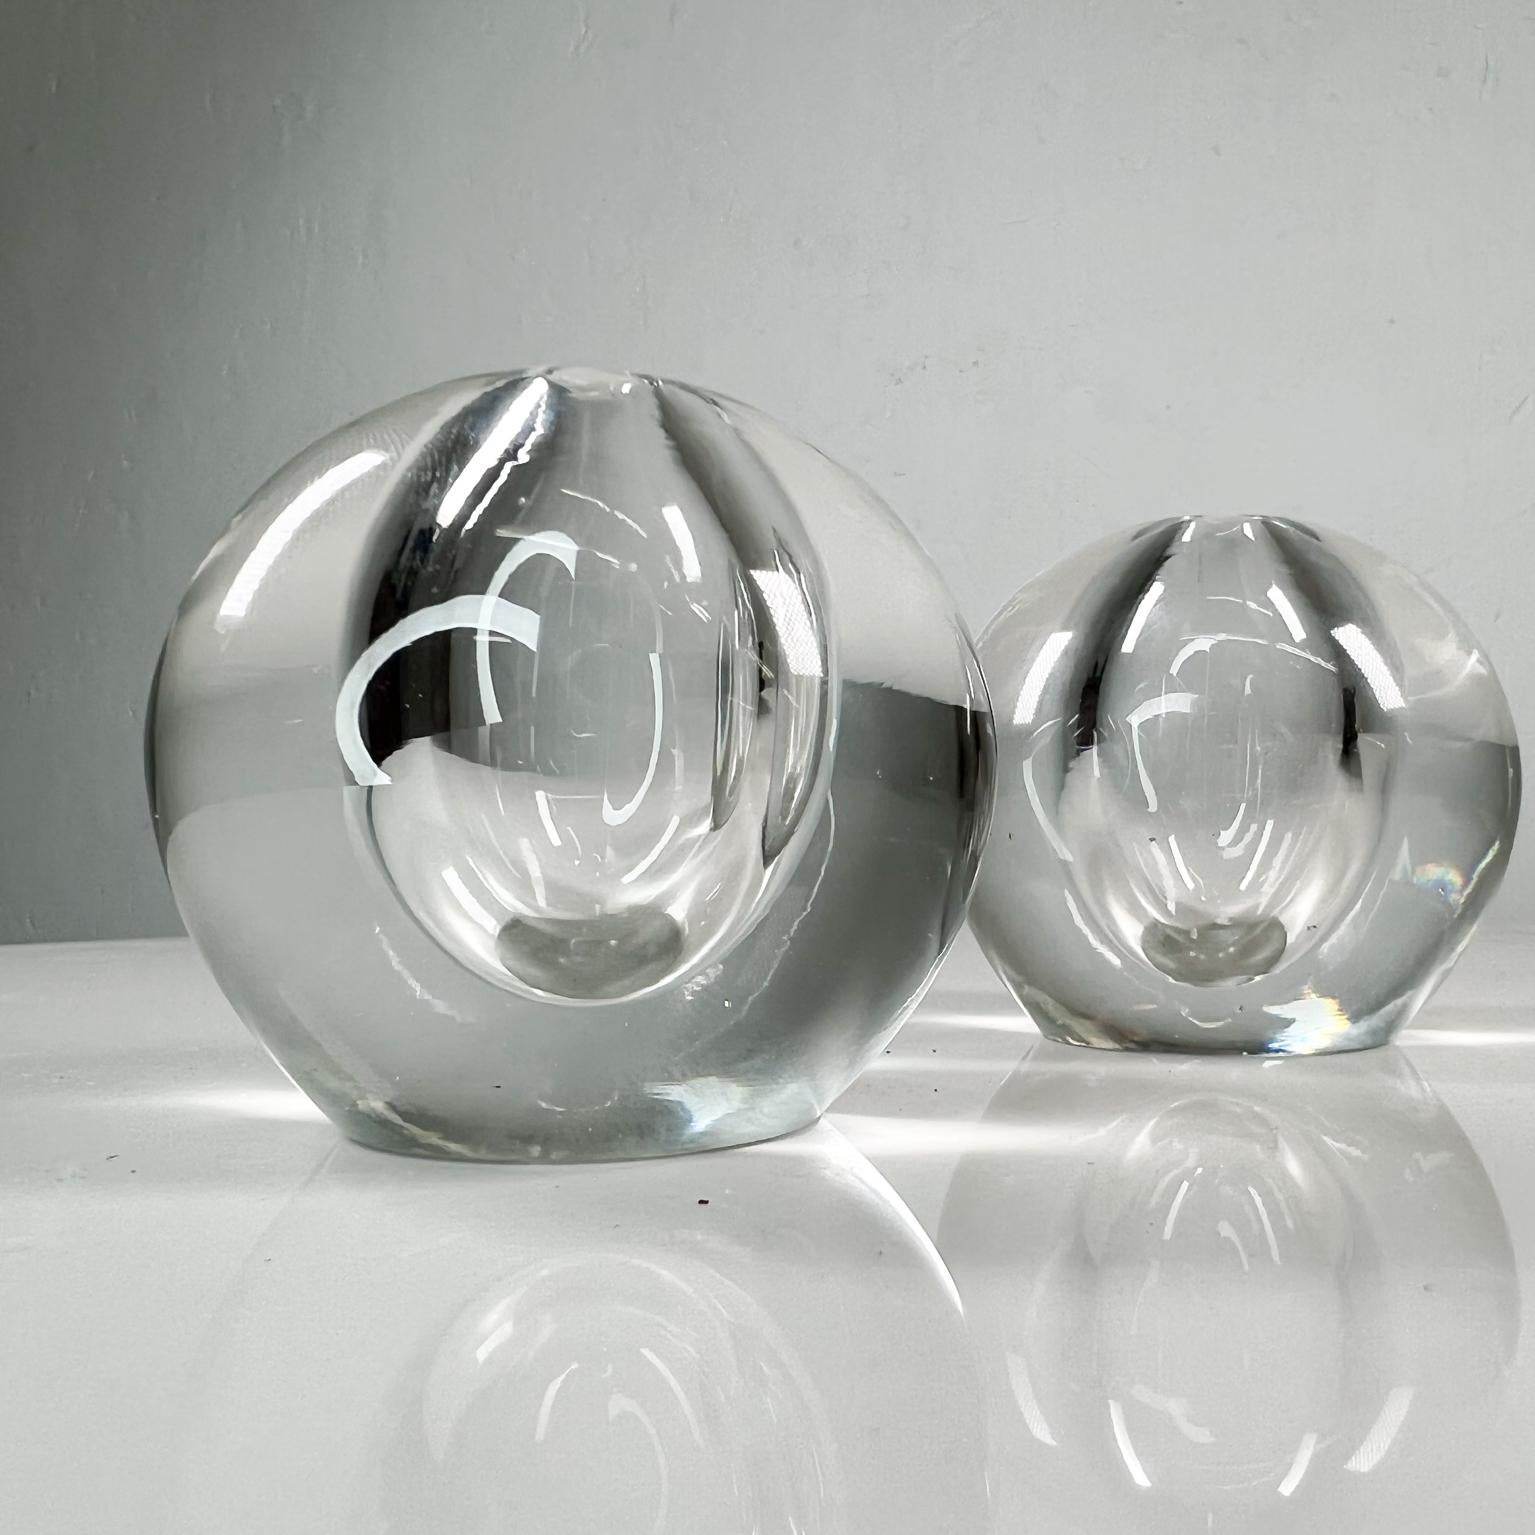 Mid-20th Century 1960s Modern Orb Globe Art Glass Vase Pair Style of Rosenthal Studio Line